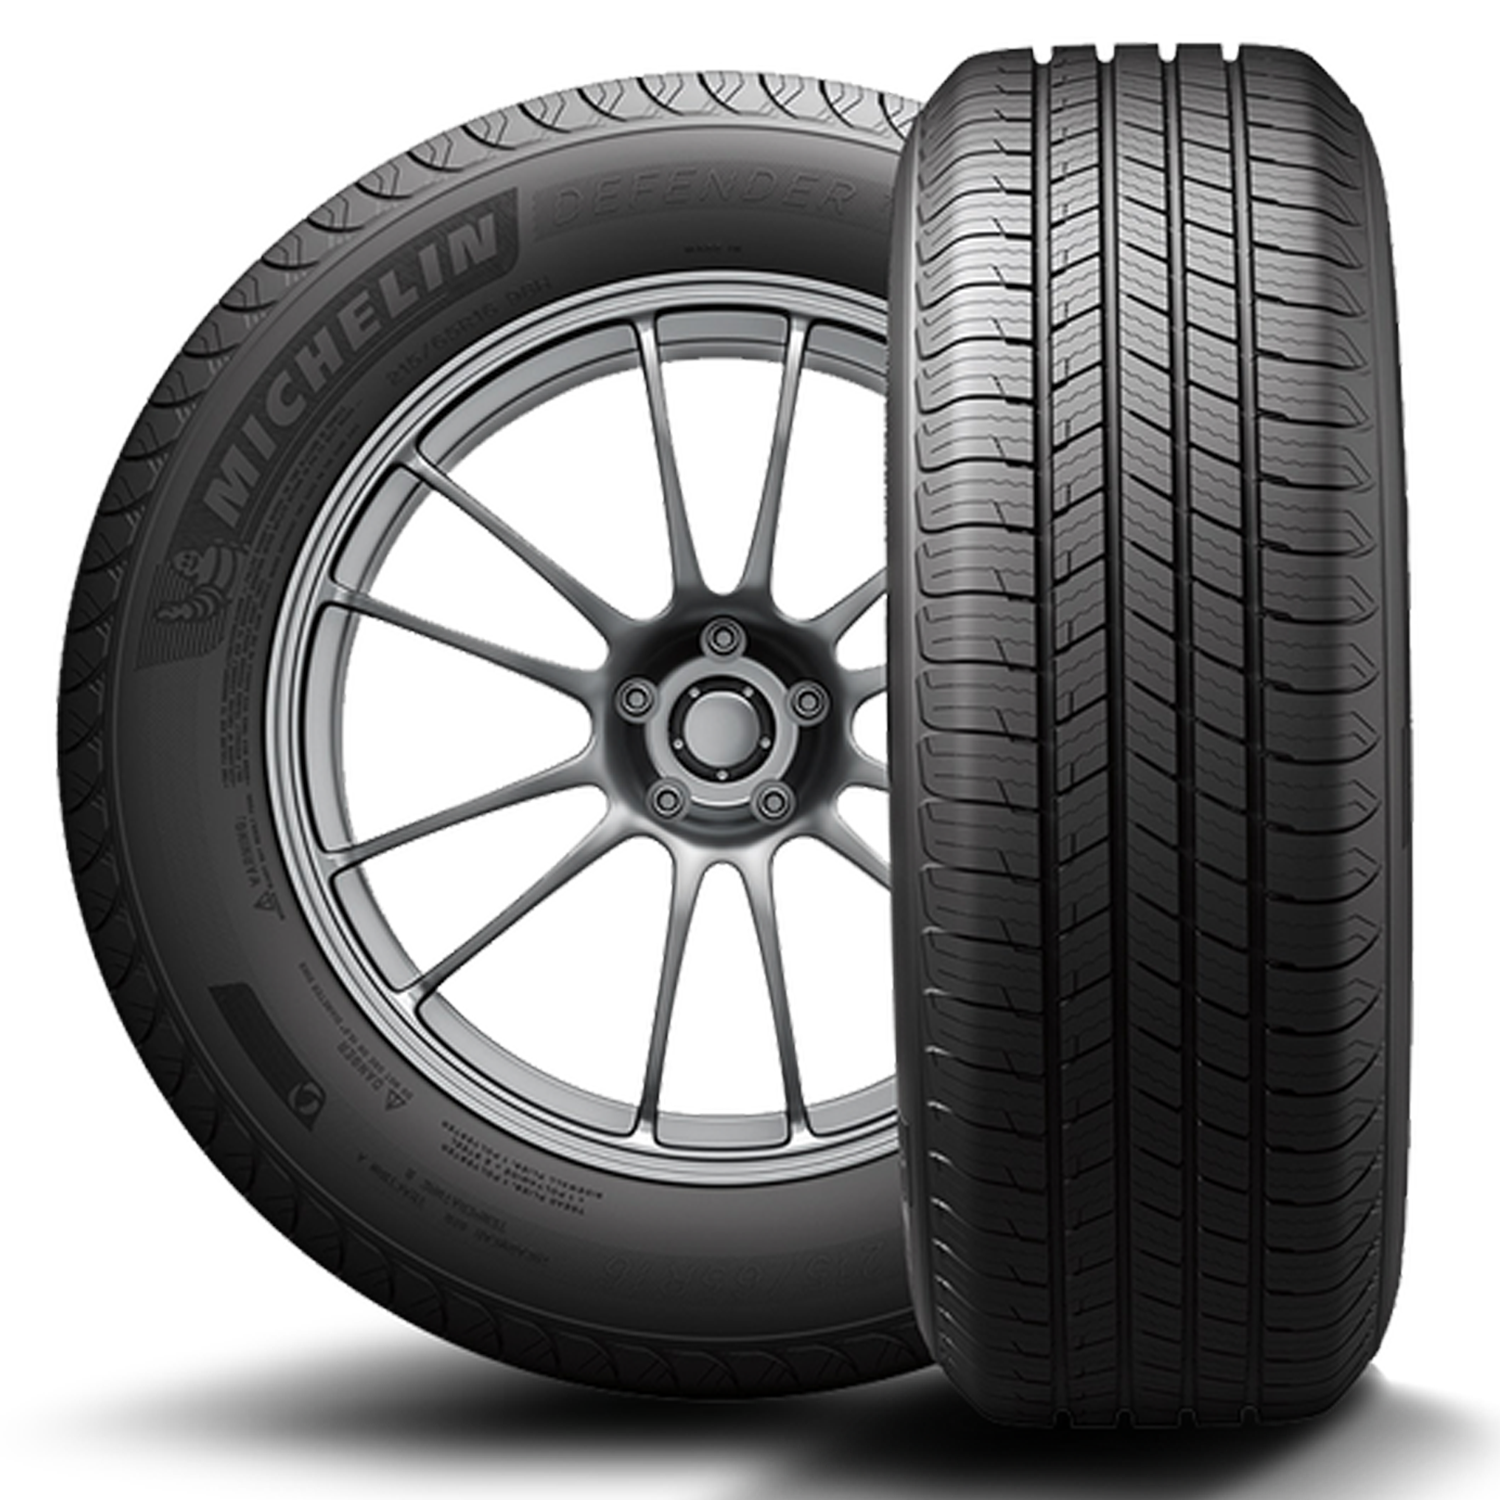 Michelin Defender T + H All-Season 215/55R17 94H Tire - image 3 of 14